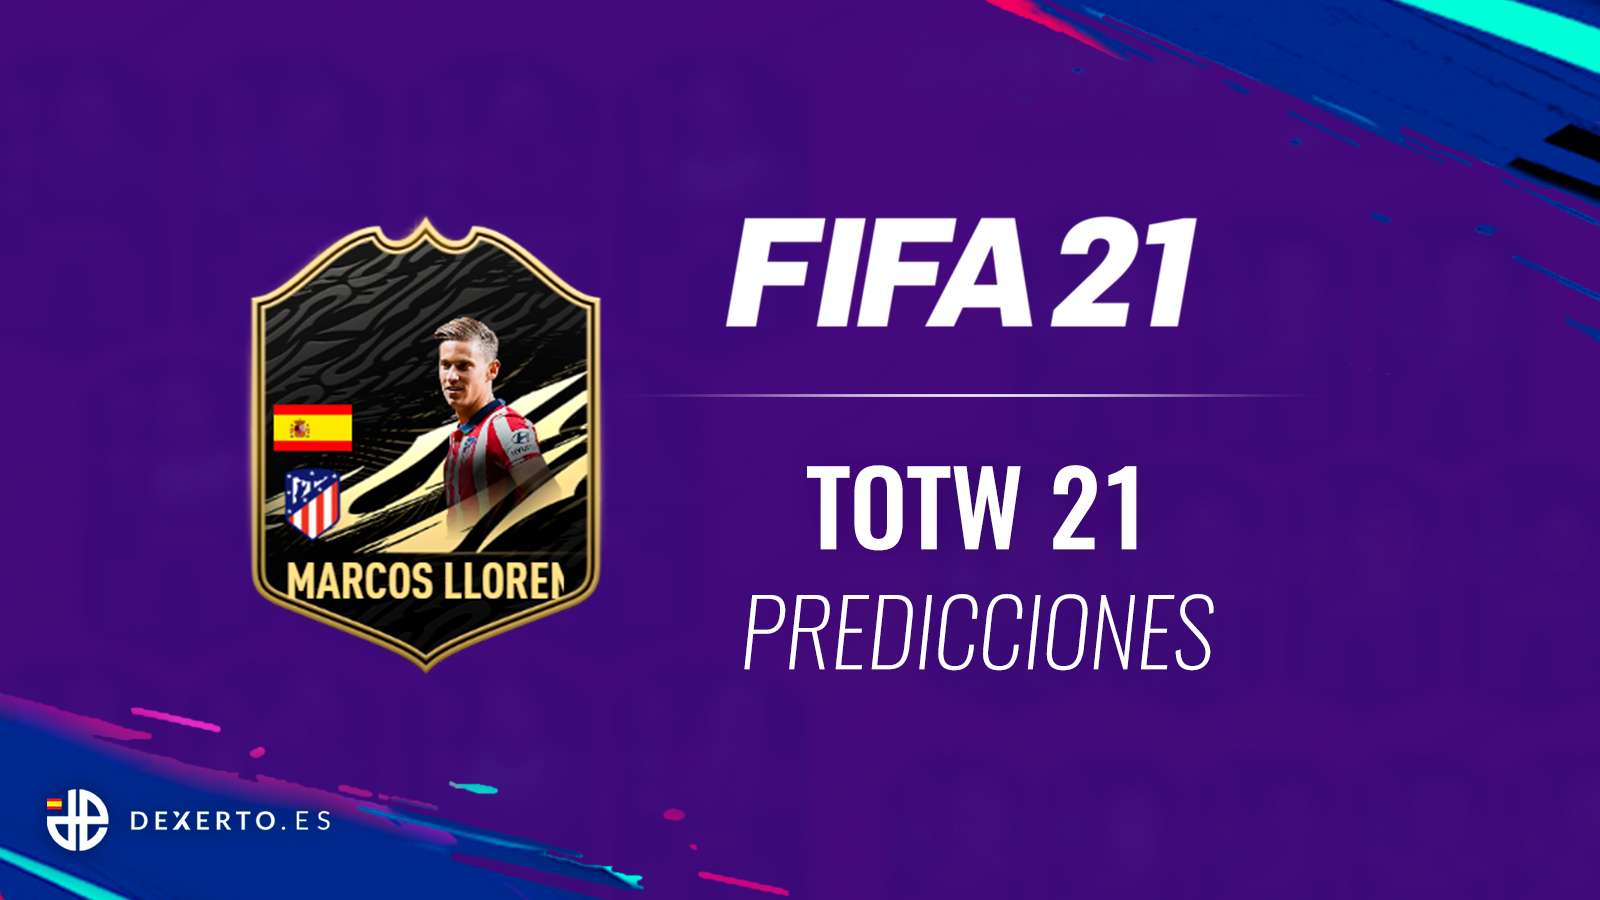 Marcos Llorente predicciones FIFA 21 TOTW